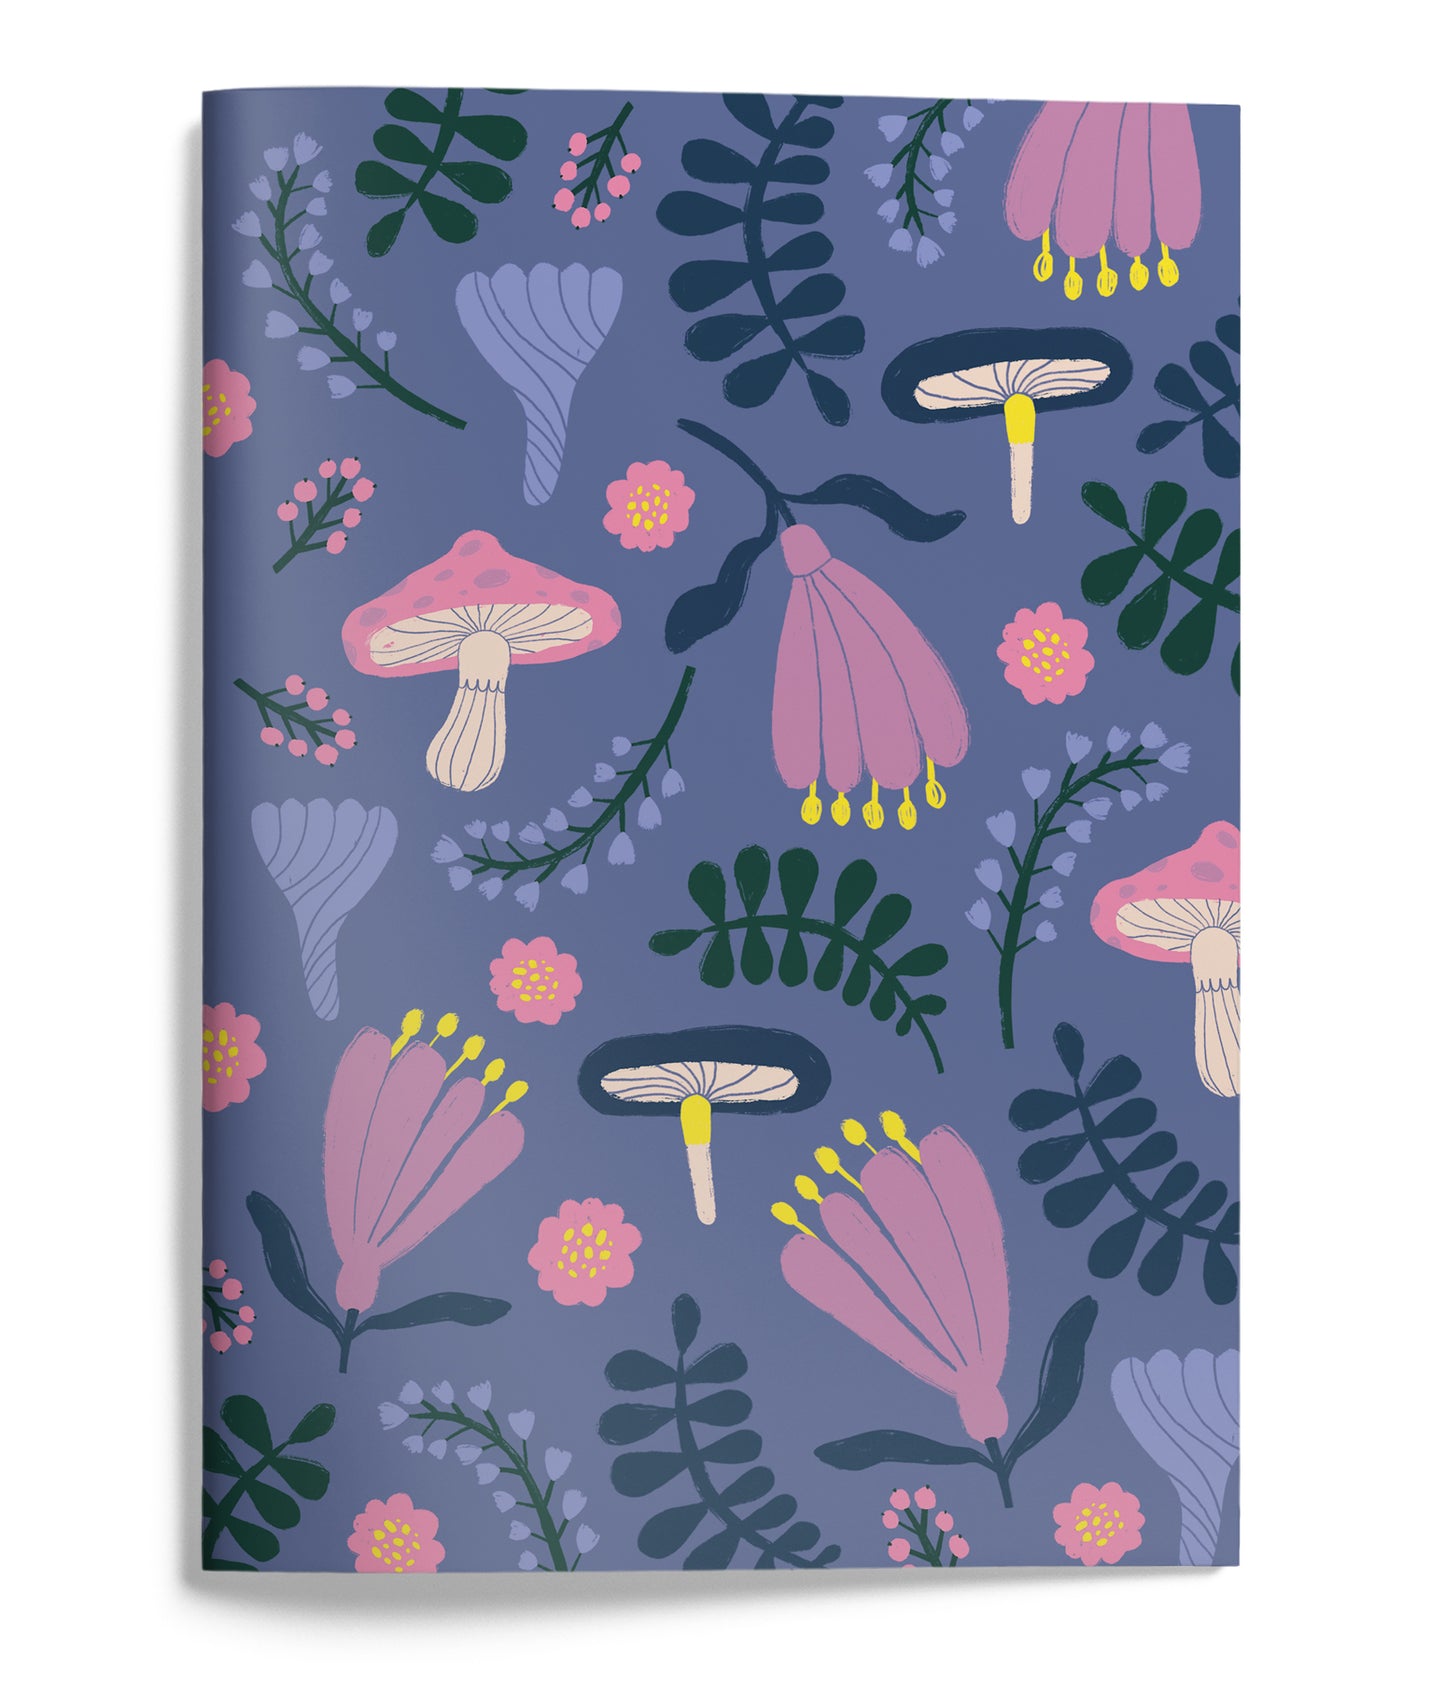 Notebook A5 Mira Mallius - Home forest, mushrooms